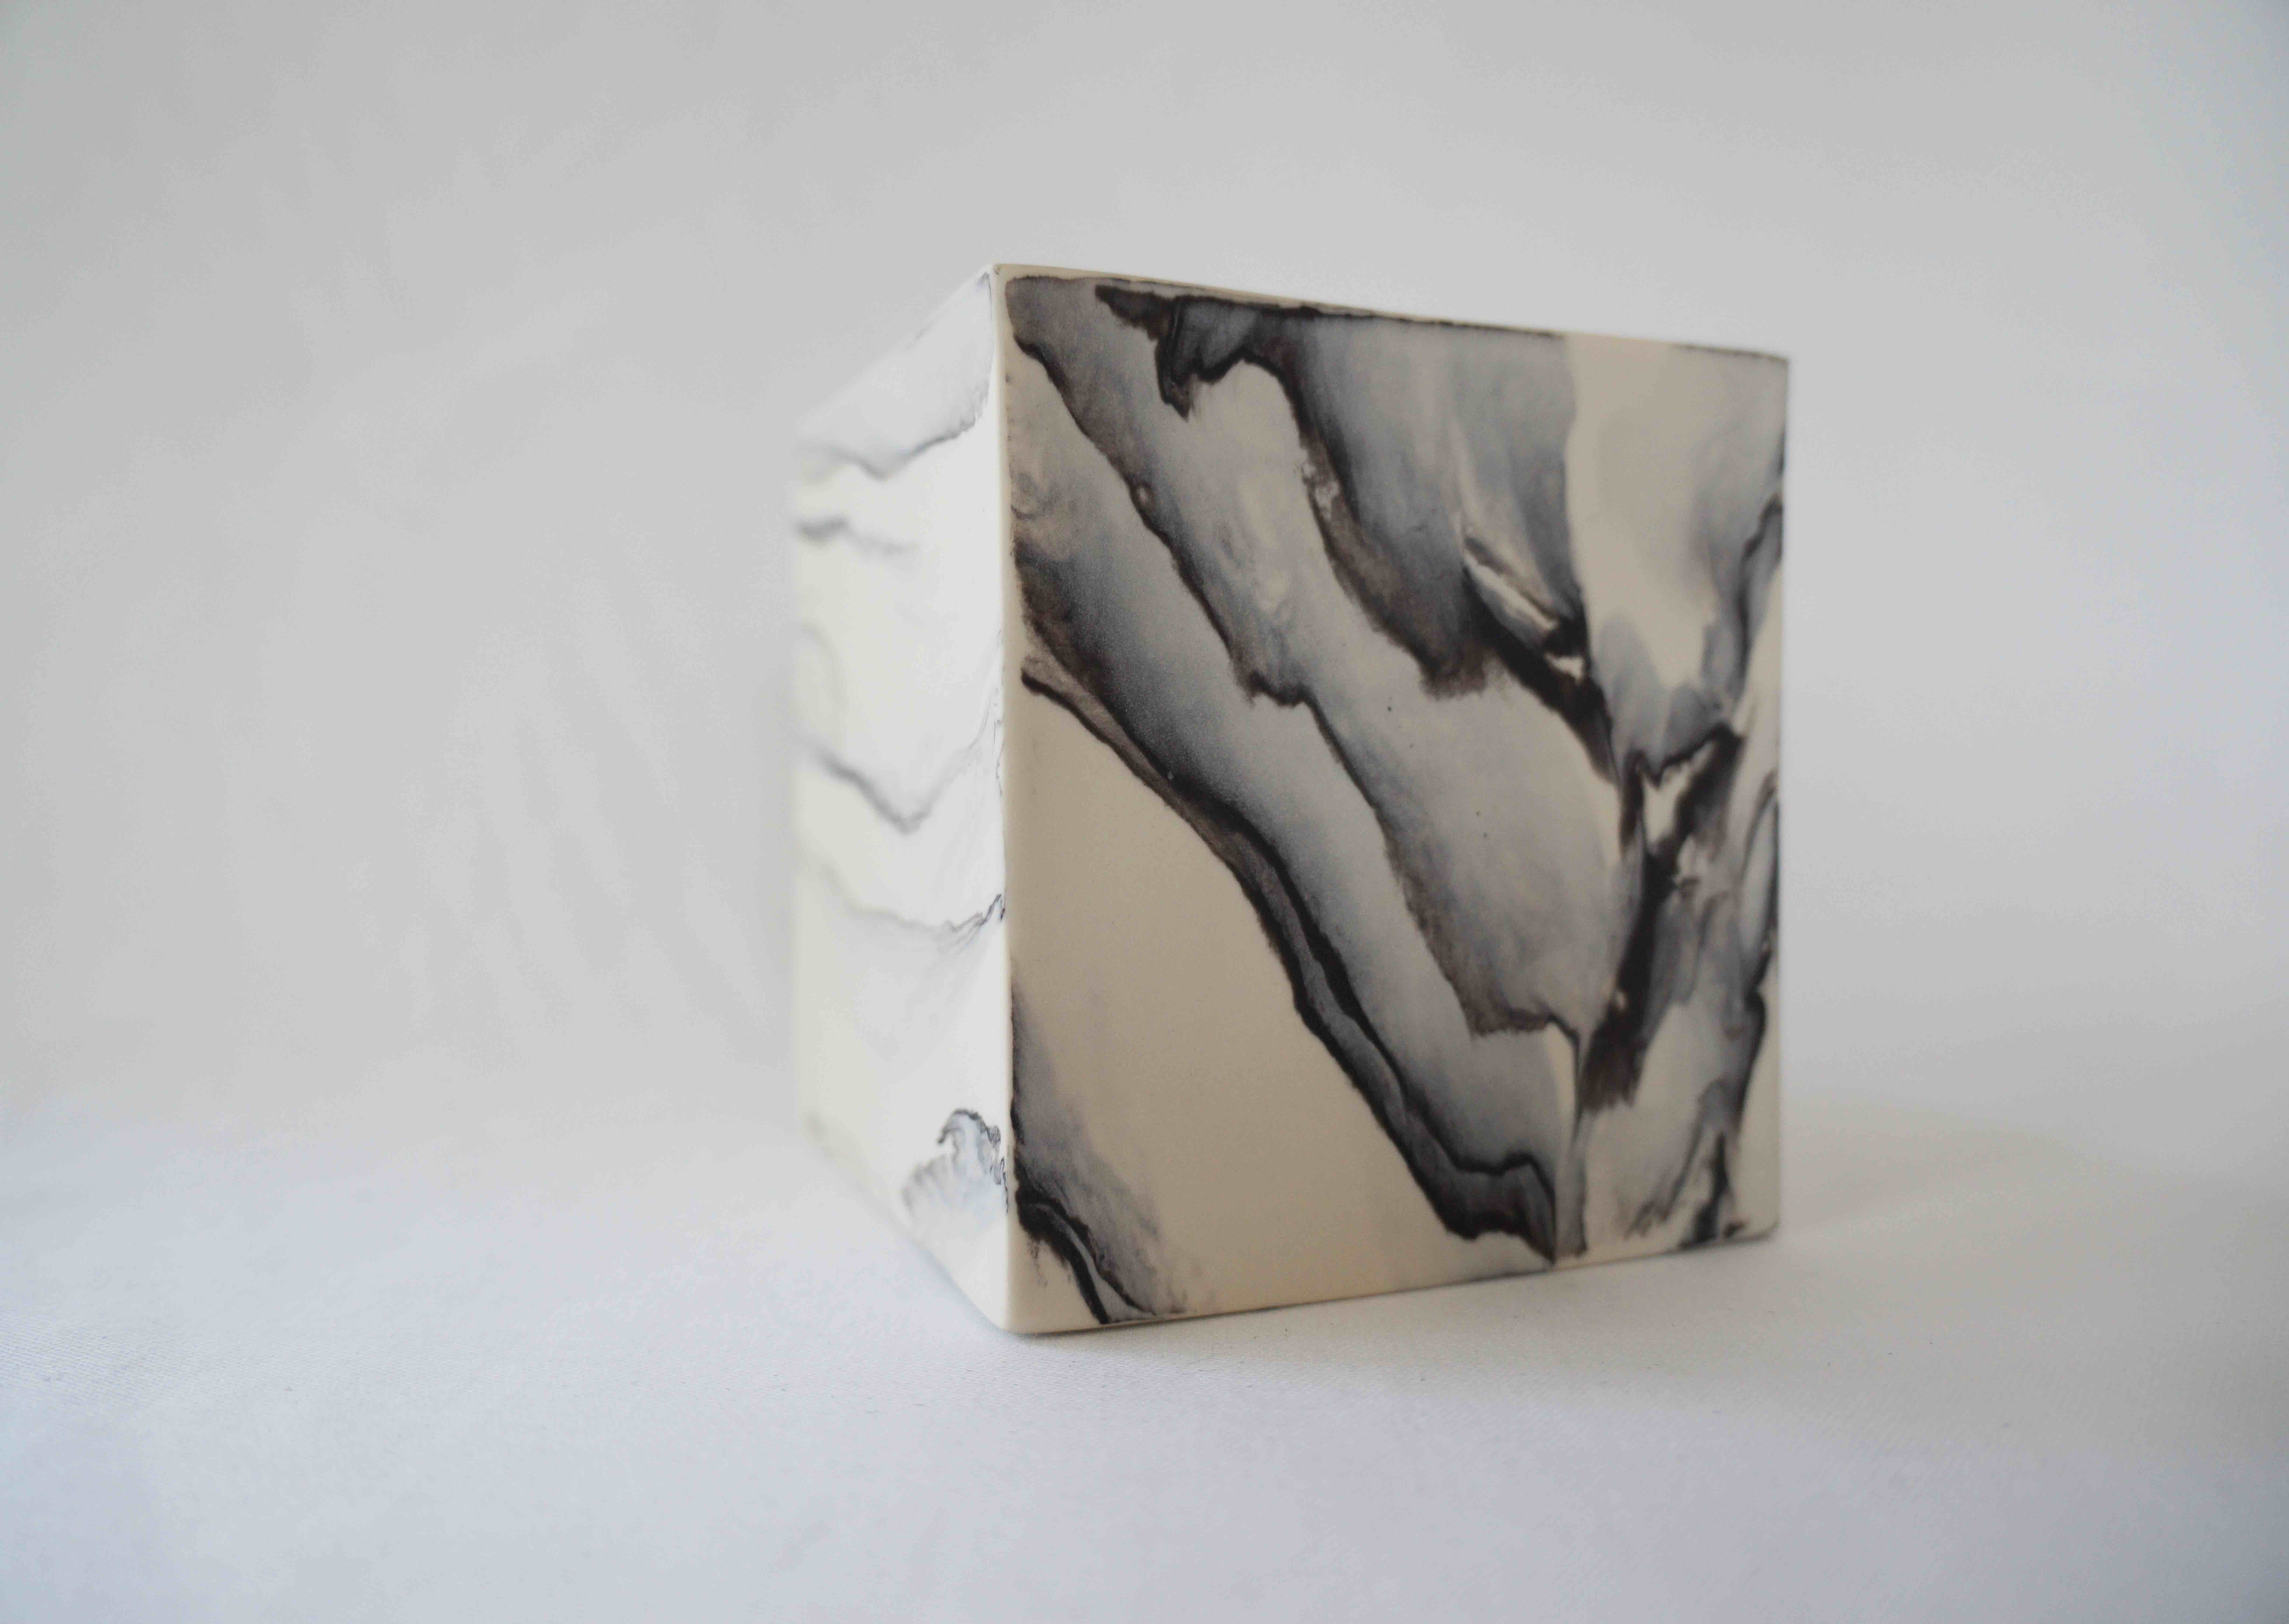 A monochrome pocelain cube form by ceramicist Kim Colebrook